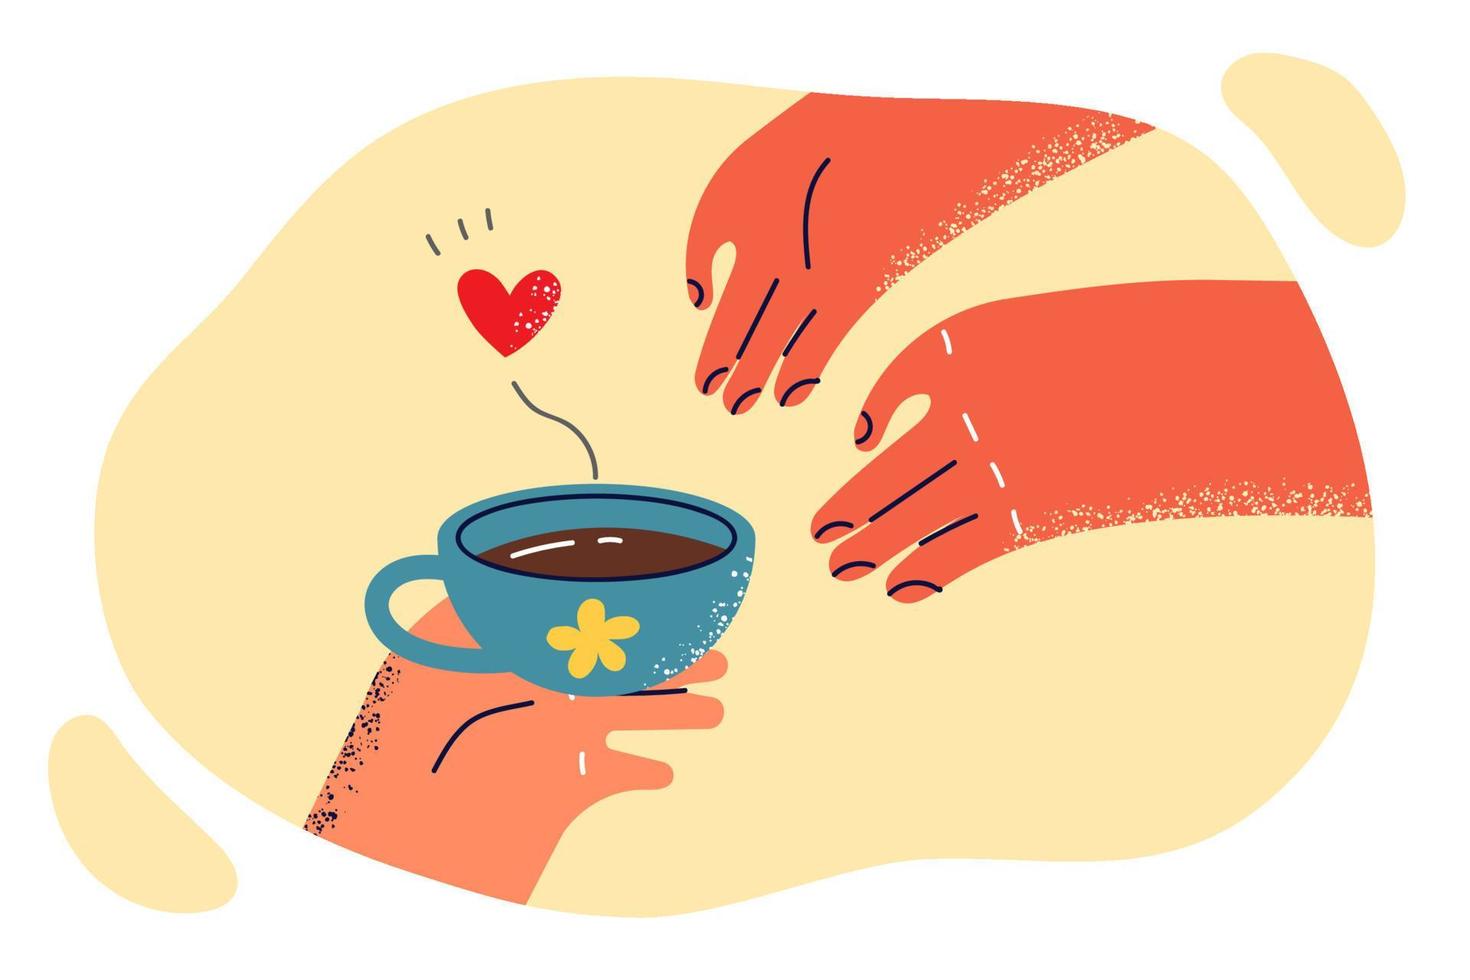 mano pasa recién elaborada café a otro persona como romántico gesto o noviazgo durante amor relación. taza de caliente café con corazón como metáfora para romántico presente para amado uno vector